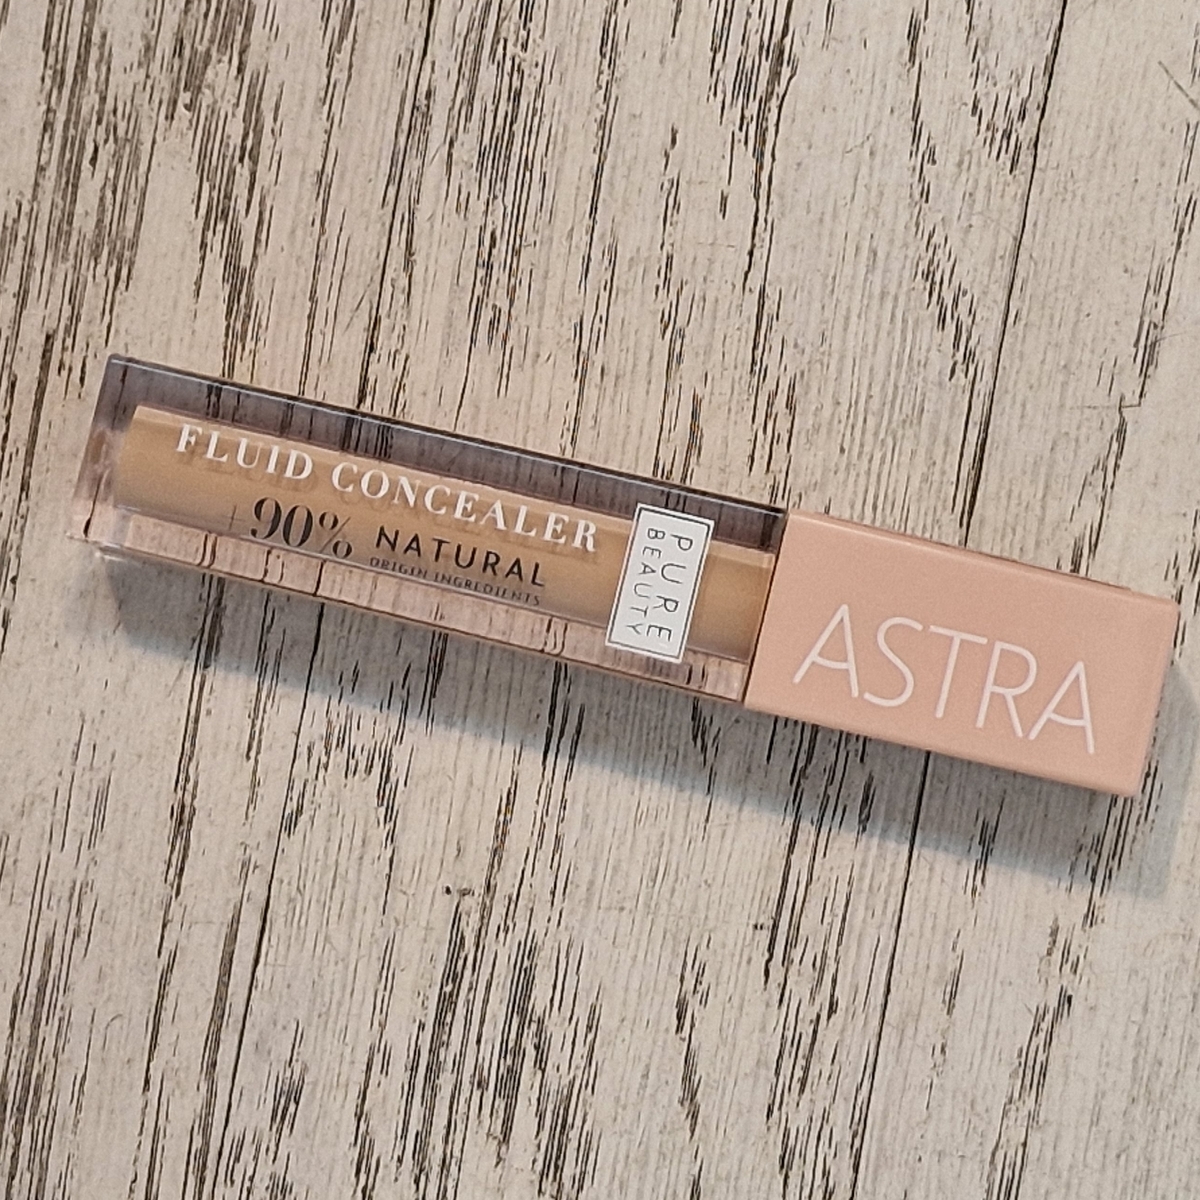 Astra Pure Beauty fluid concealer Reviews | abillion